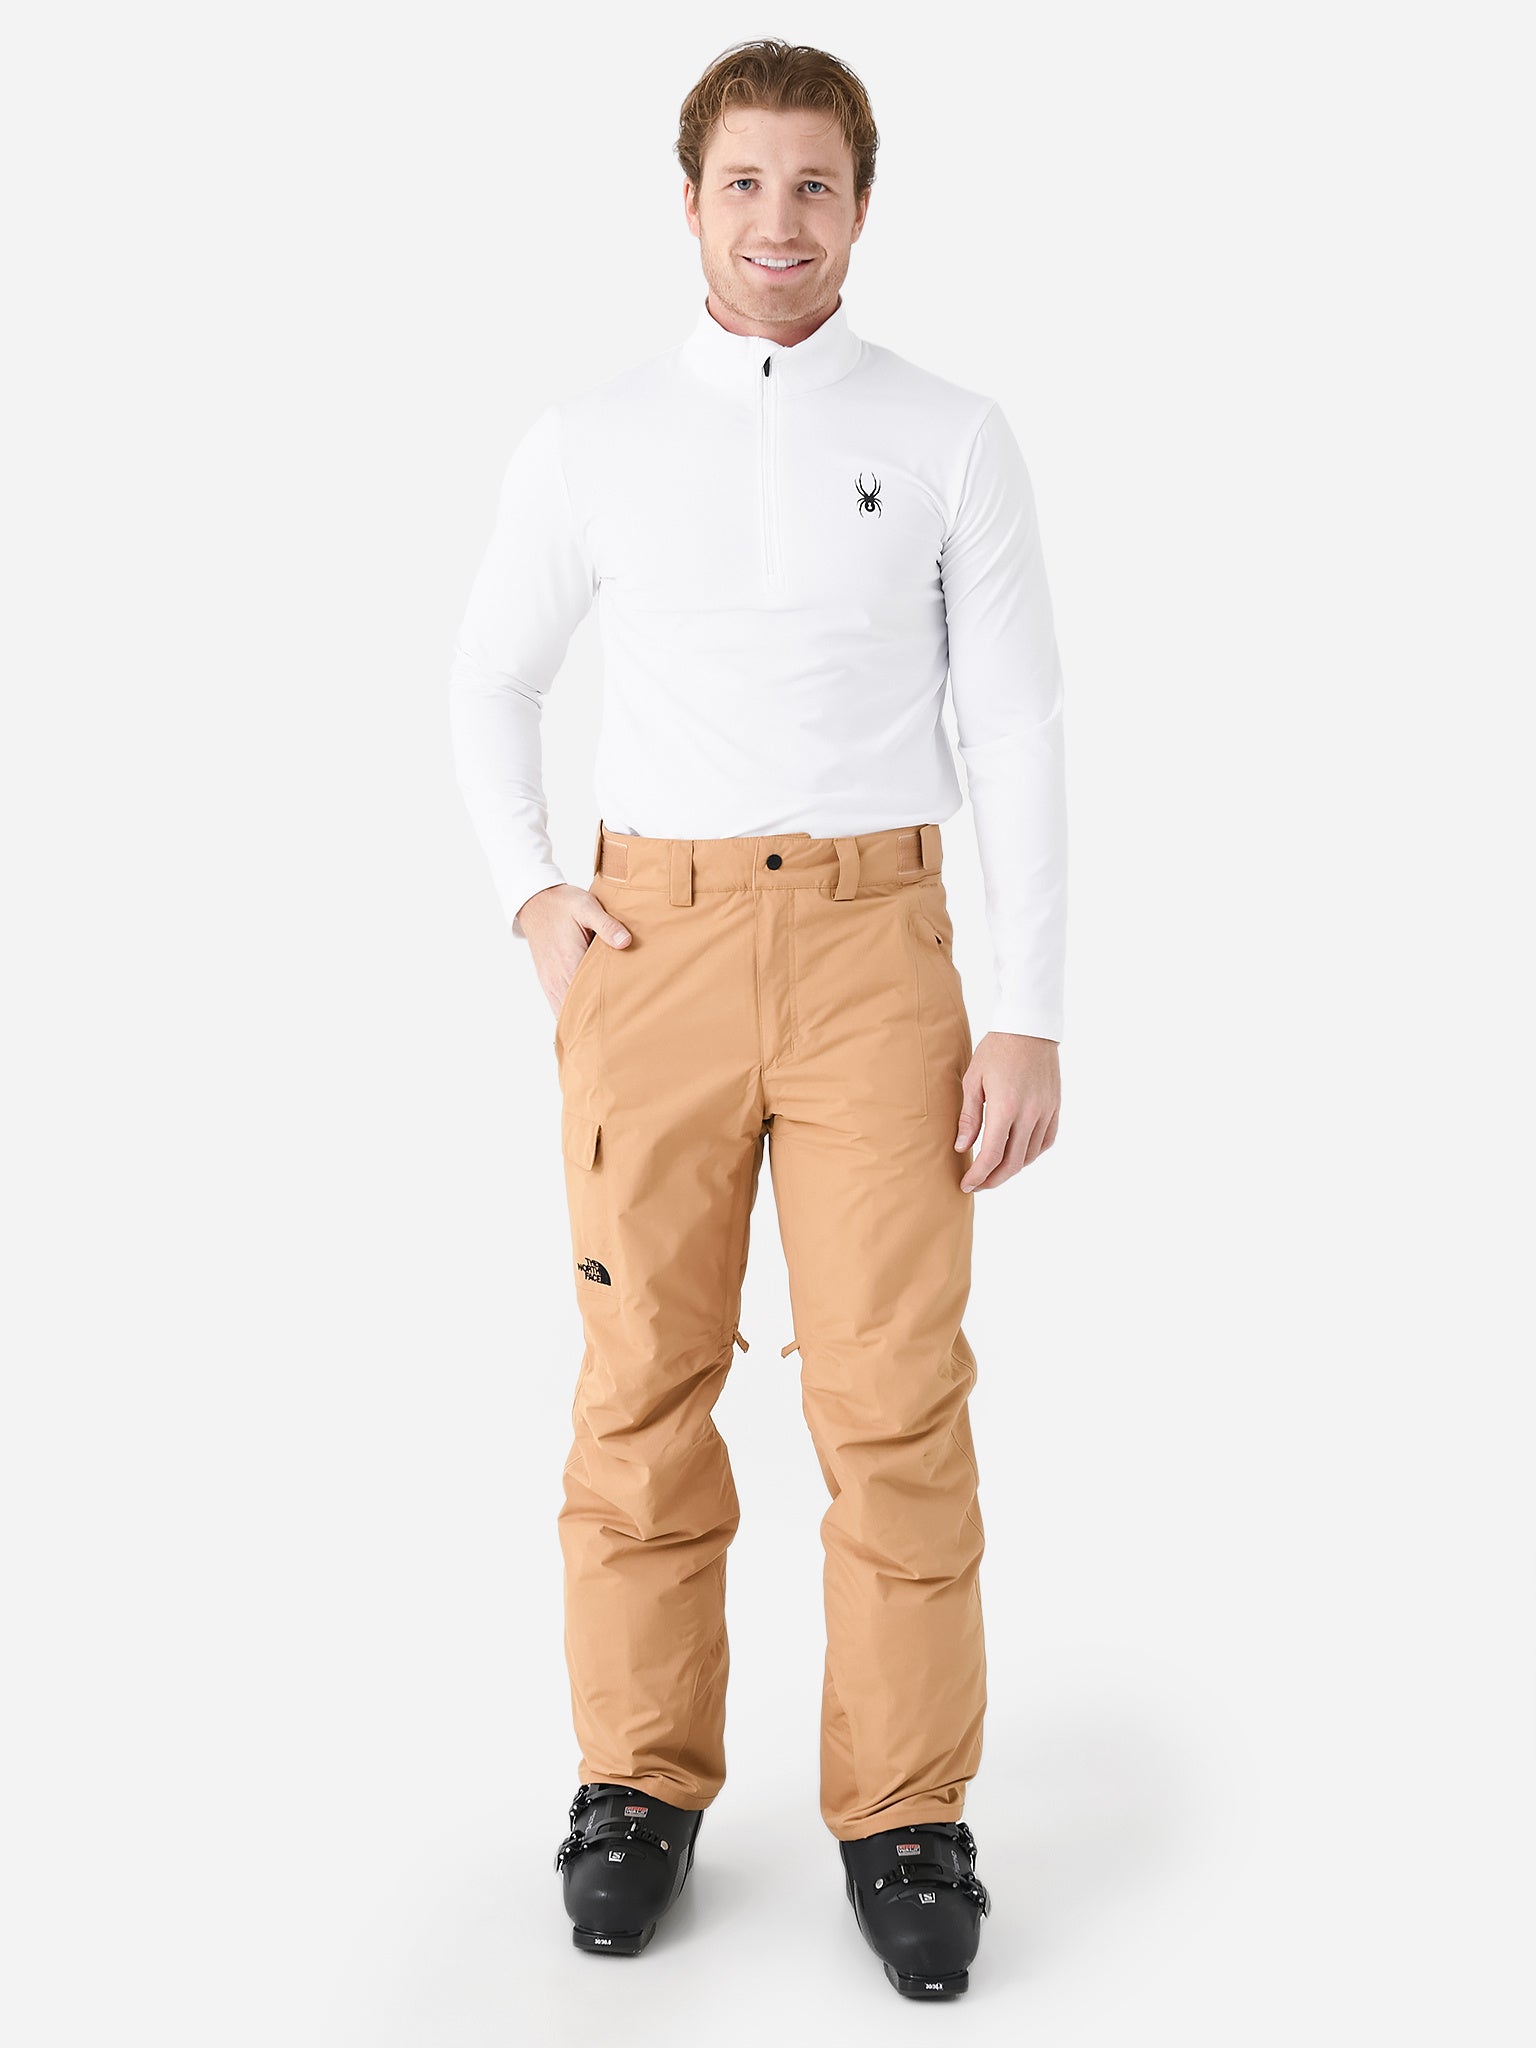 Formal Pants (Black/Almond Colour Avail)